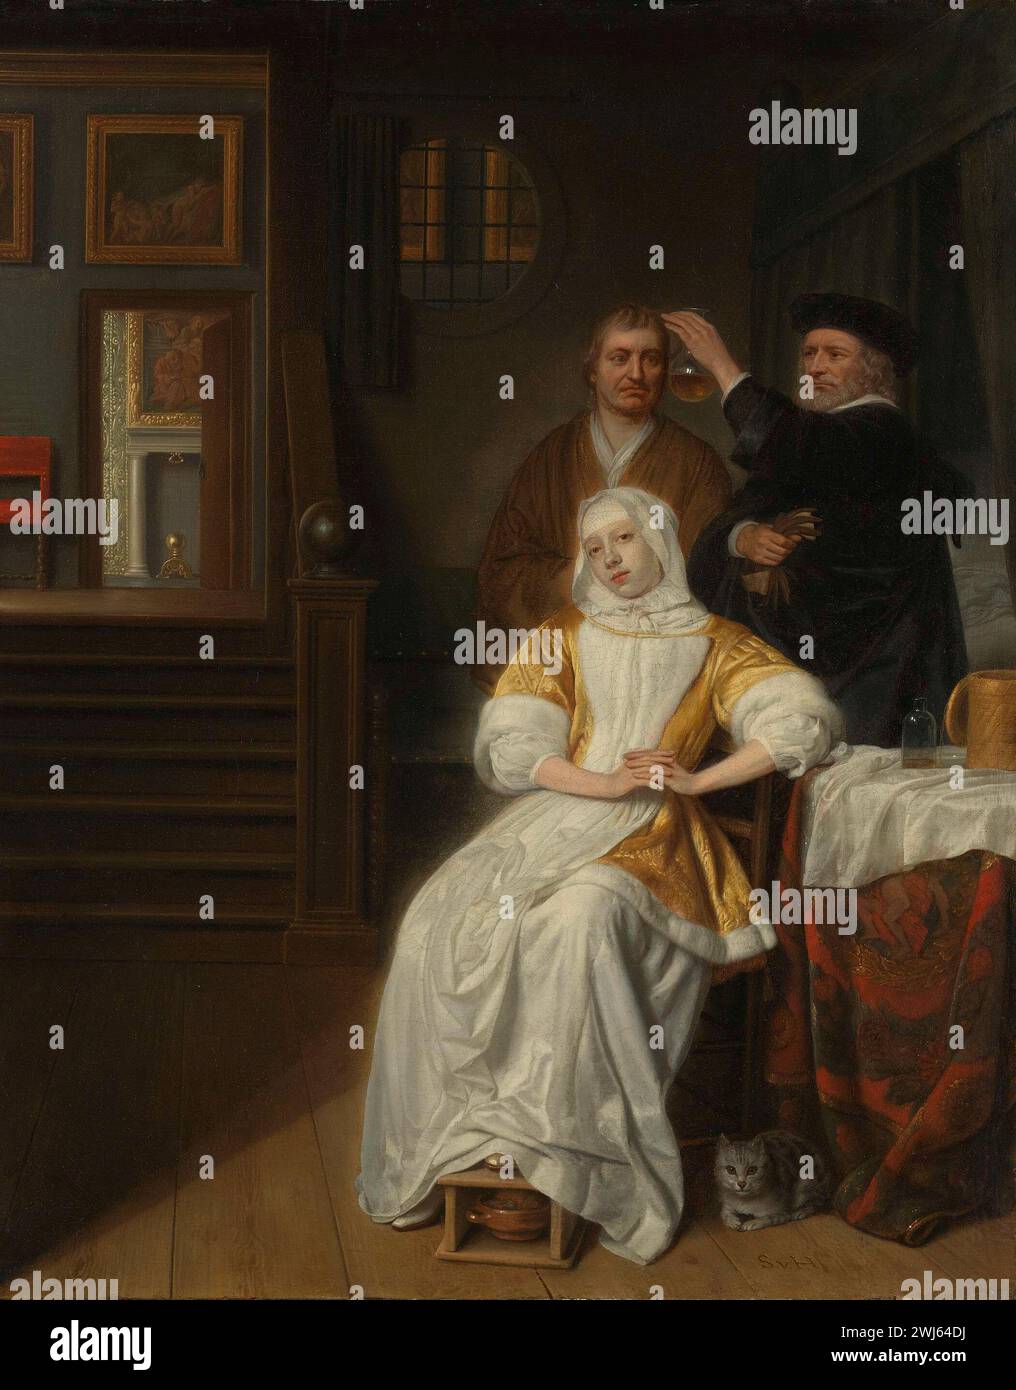 'The Anemic Lady', Samuel van Hoogstraten, 1660 - 1678 Stock Photo